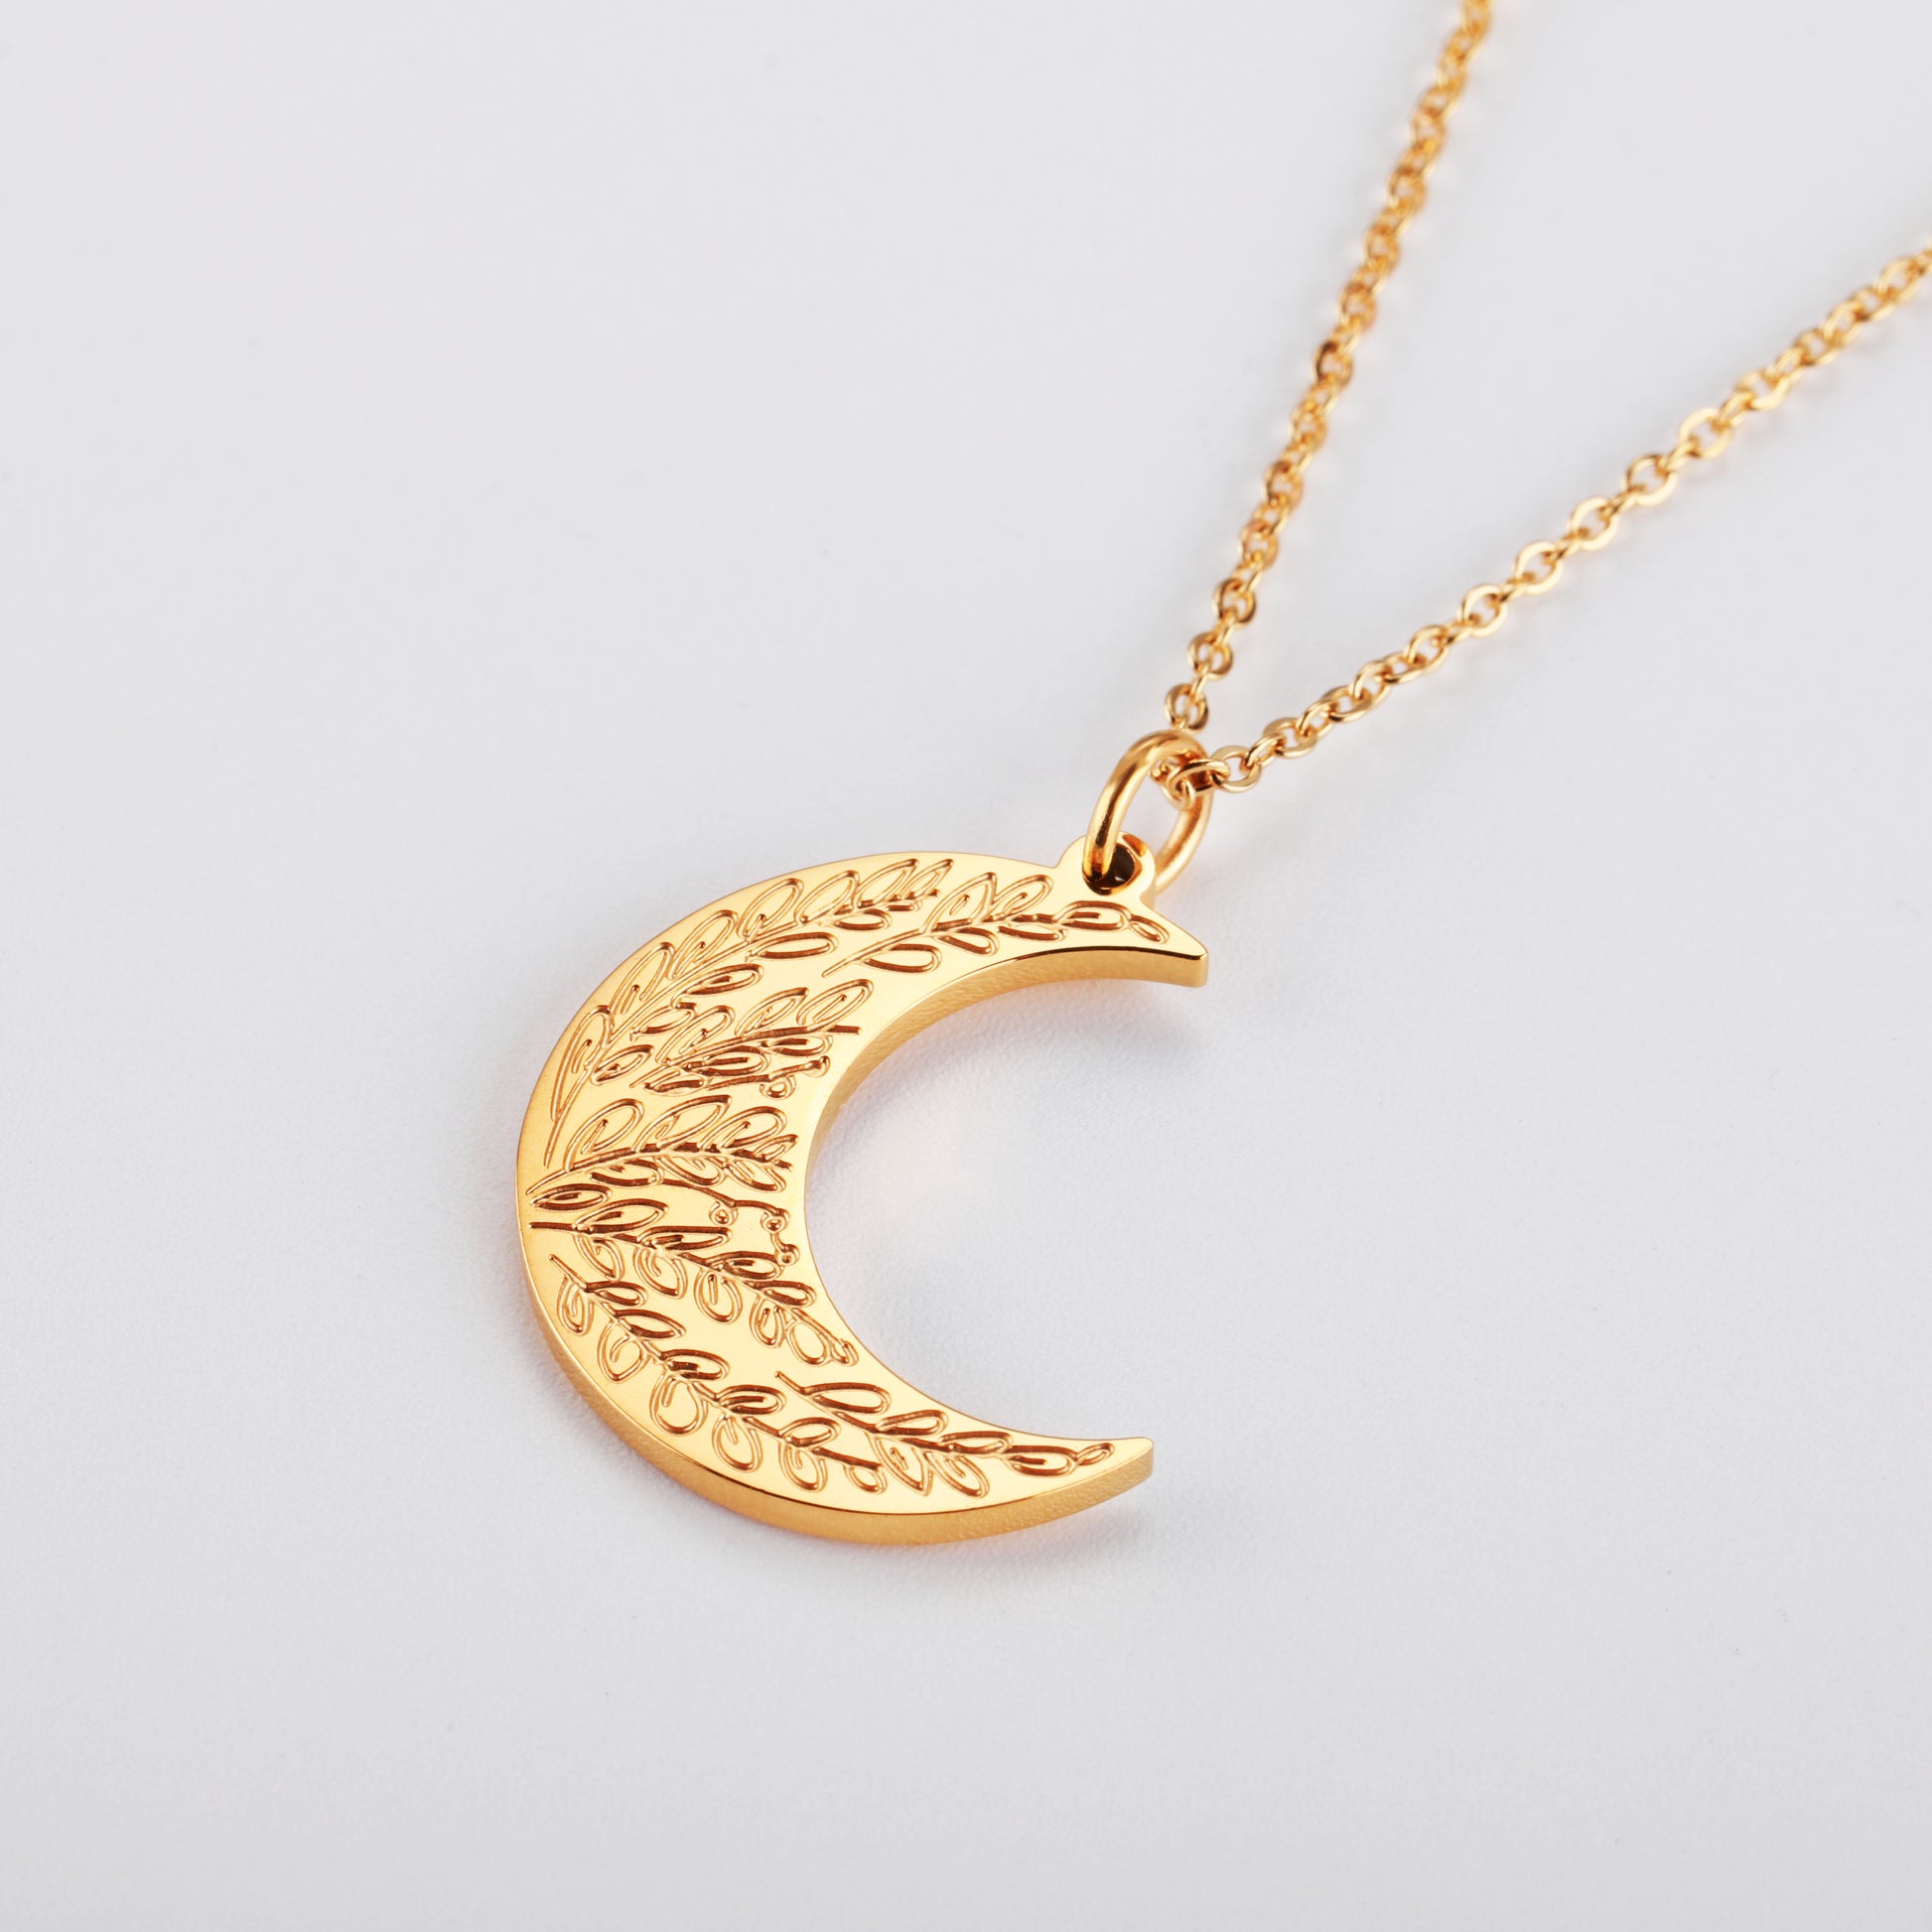 Darjali Jewelry Botanical Moon Necklace 18K Gold 